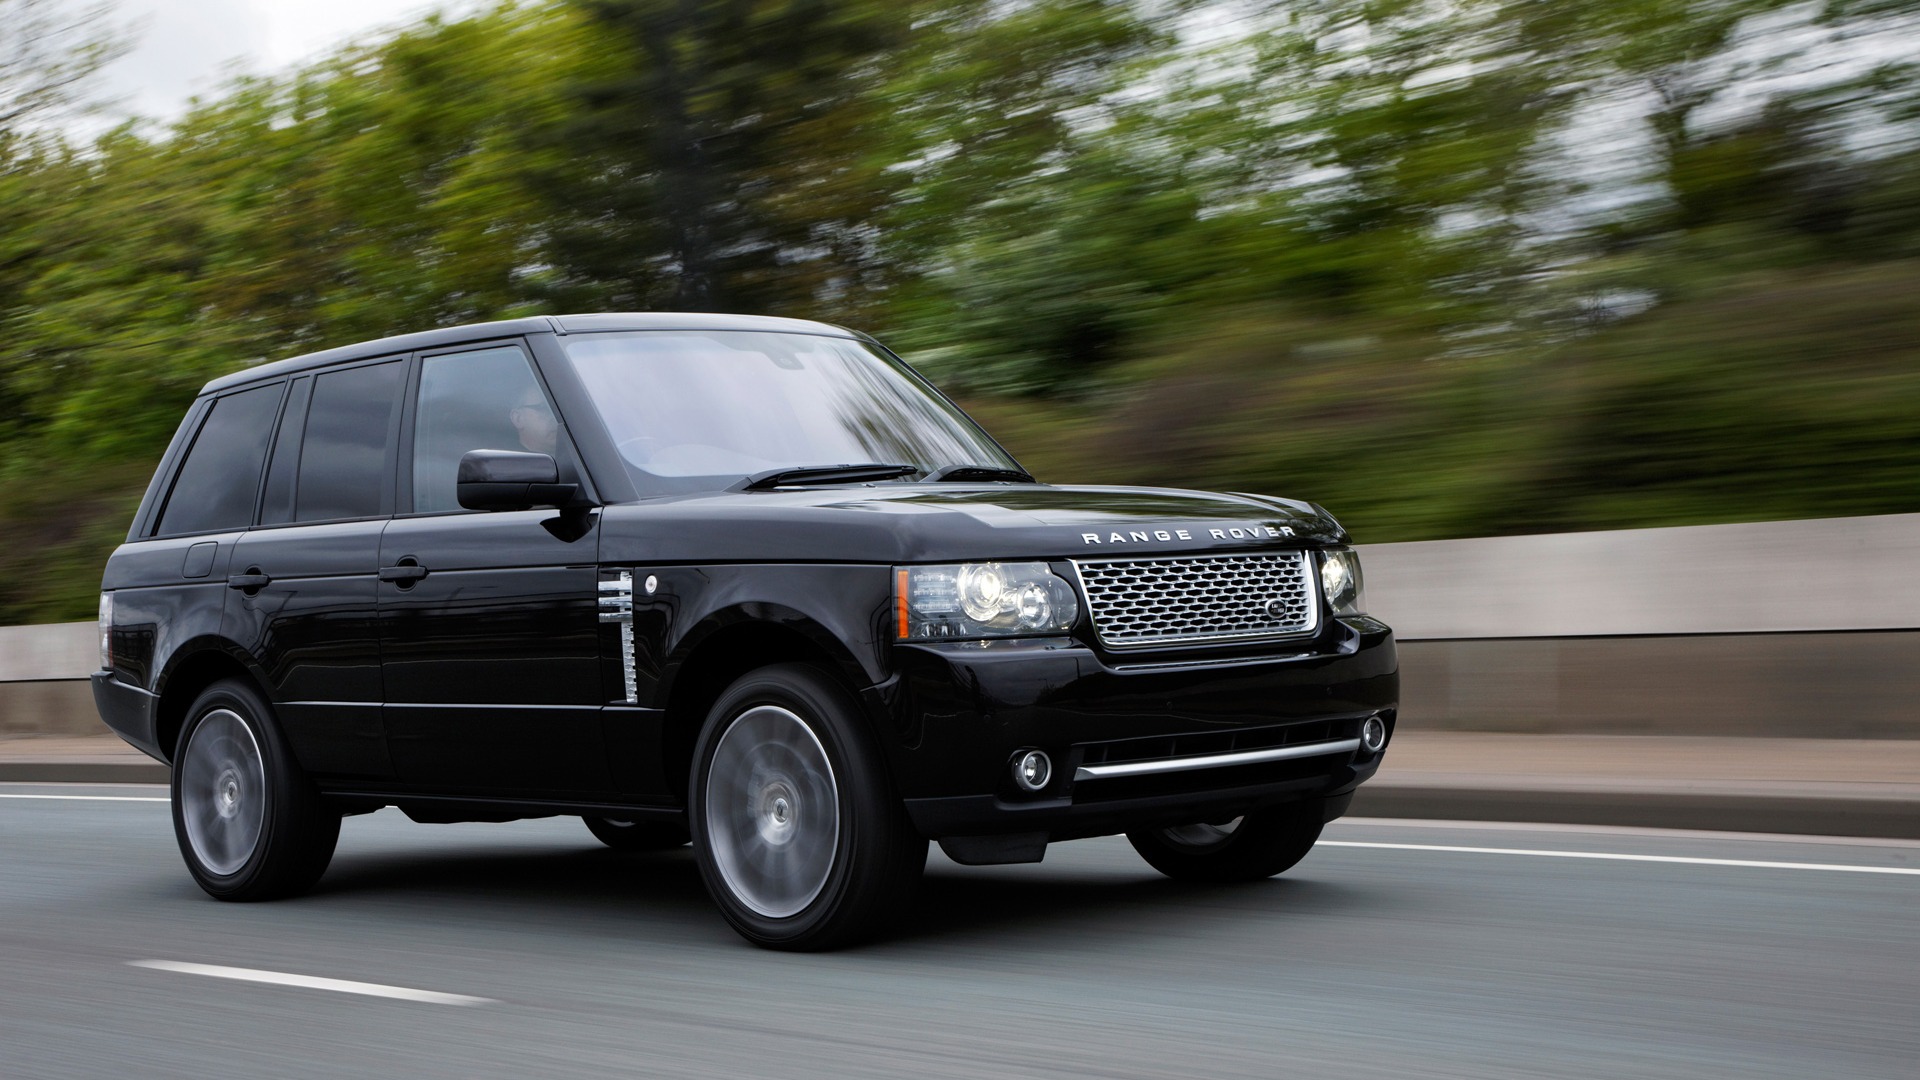 Land Rover Range Rover Black Edition - 2011 路虎16 - 1920x1080